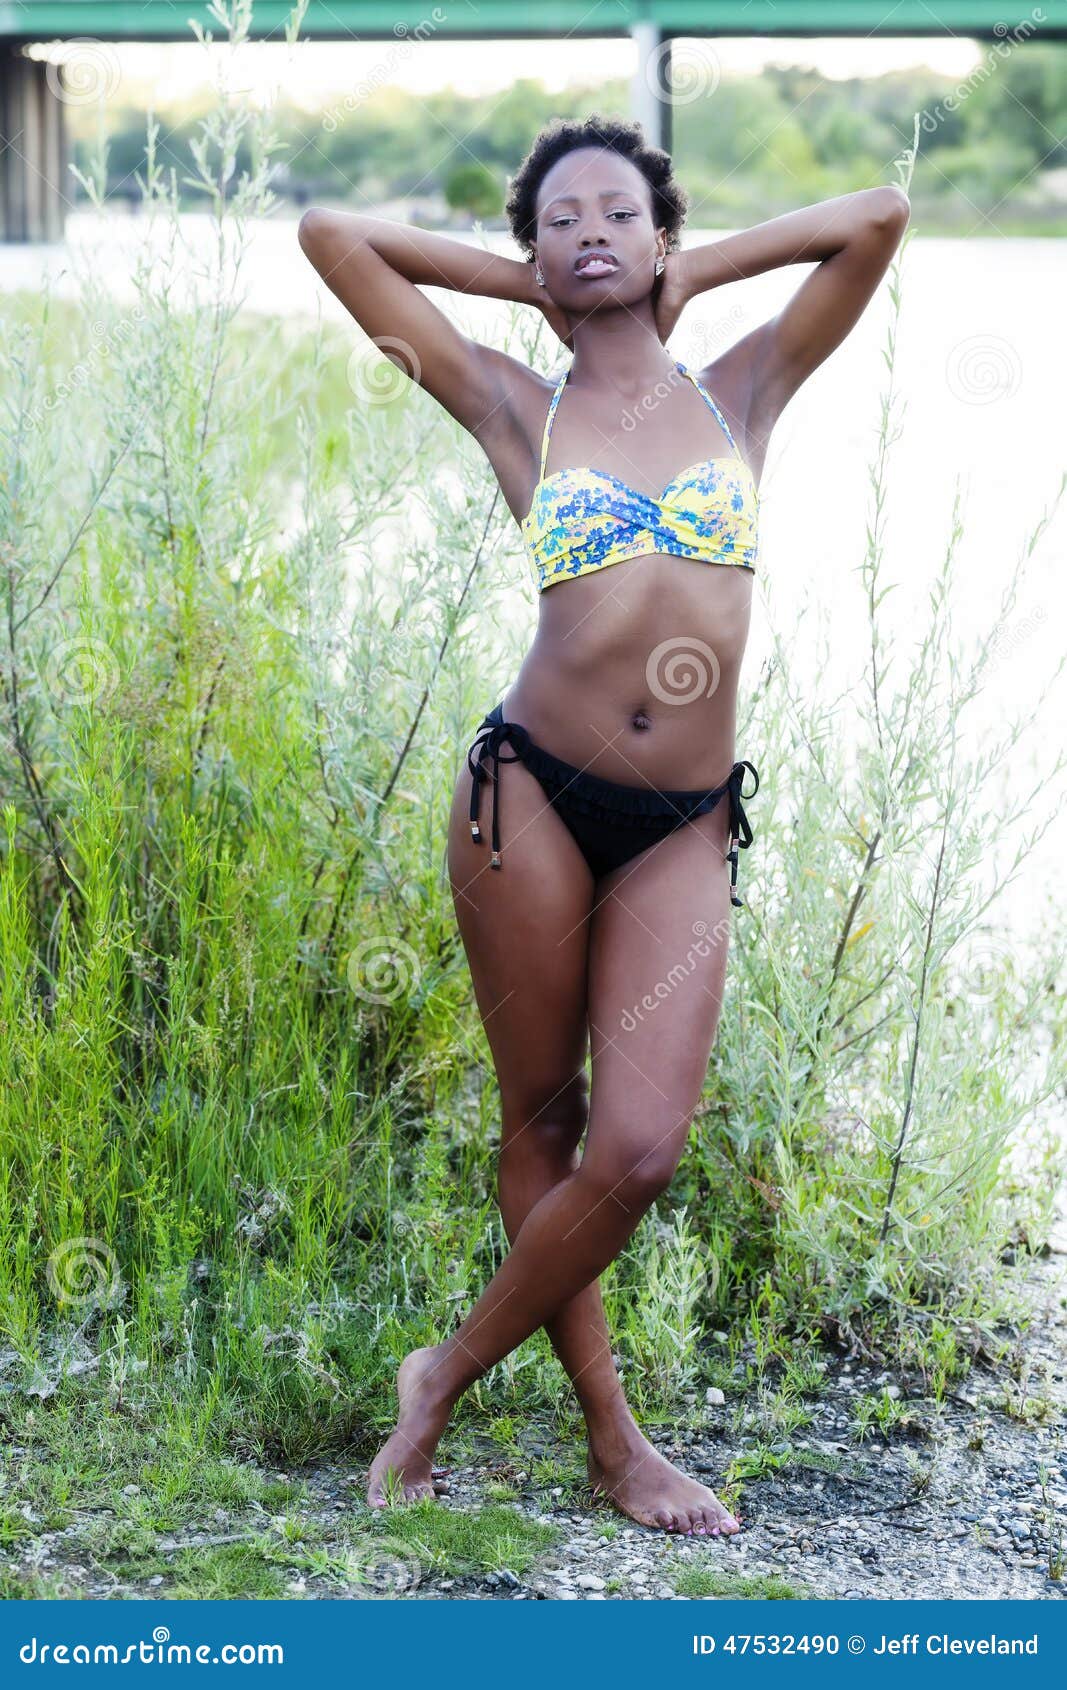 ashwani kumar add photo skinny girl in bikini